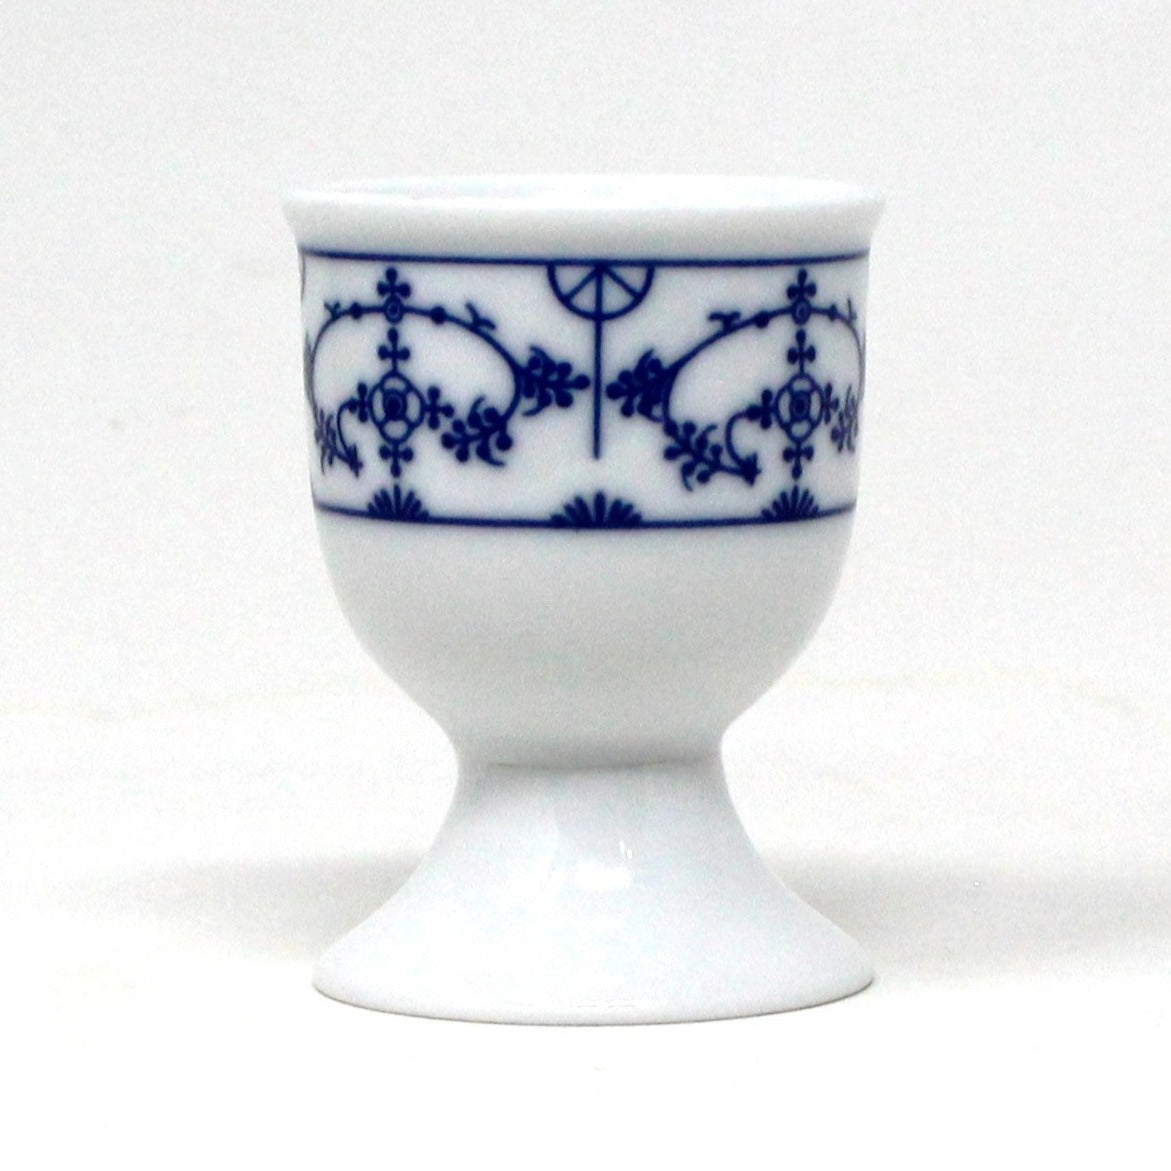 Egg Cups, Winterling Schwarzenbach, Strawflower, Blue & White, Bavaria, Set of 3, Vintage, SOLD